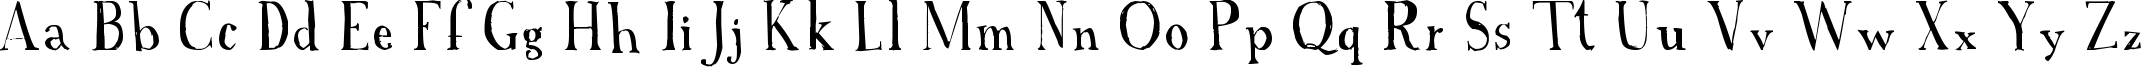 Пример написания английского алфавита шрифтом A Font with Serifs